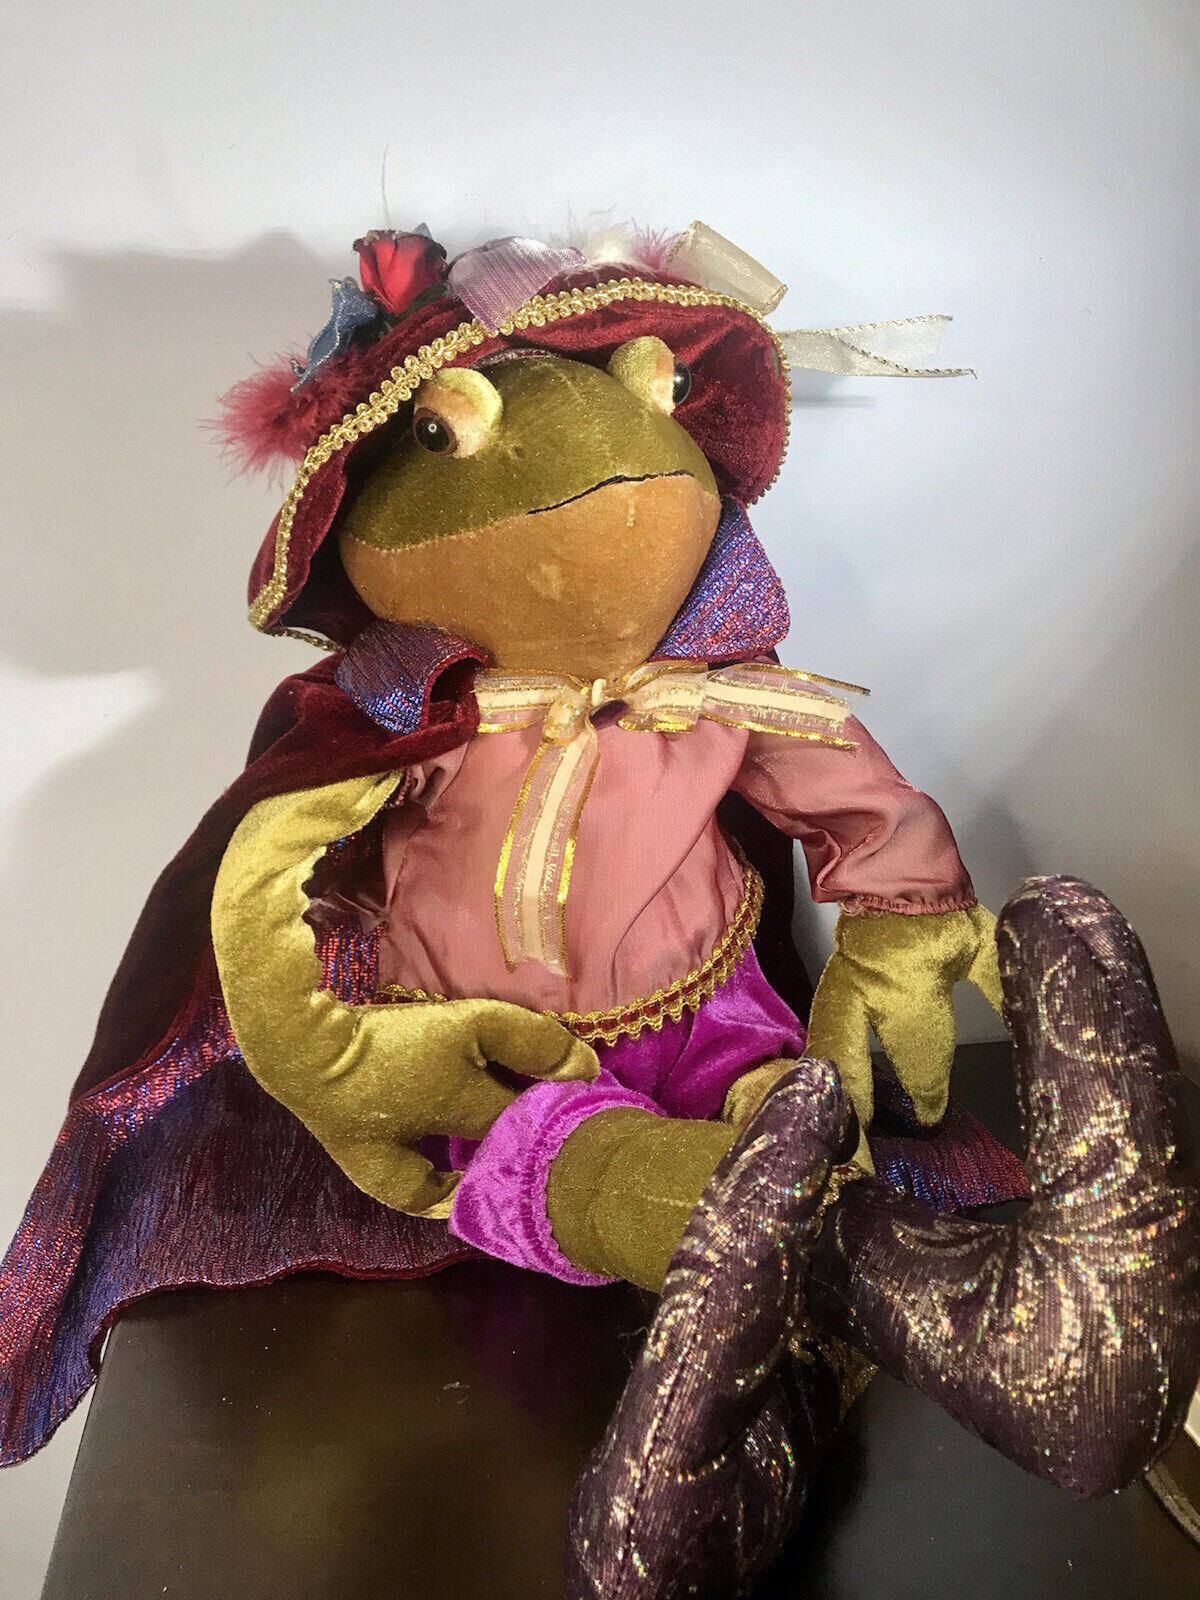 Prince Charming Frog 24” Harlequin Plush Shelf Sitter Royal Renaissance Ornate